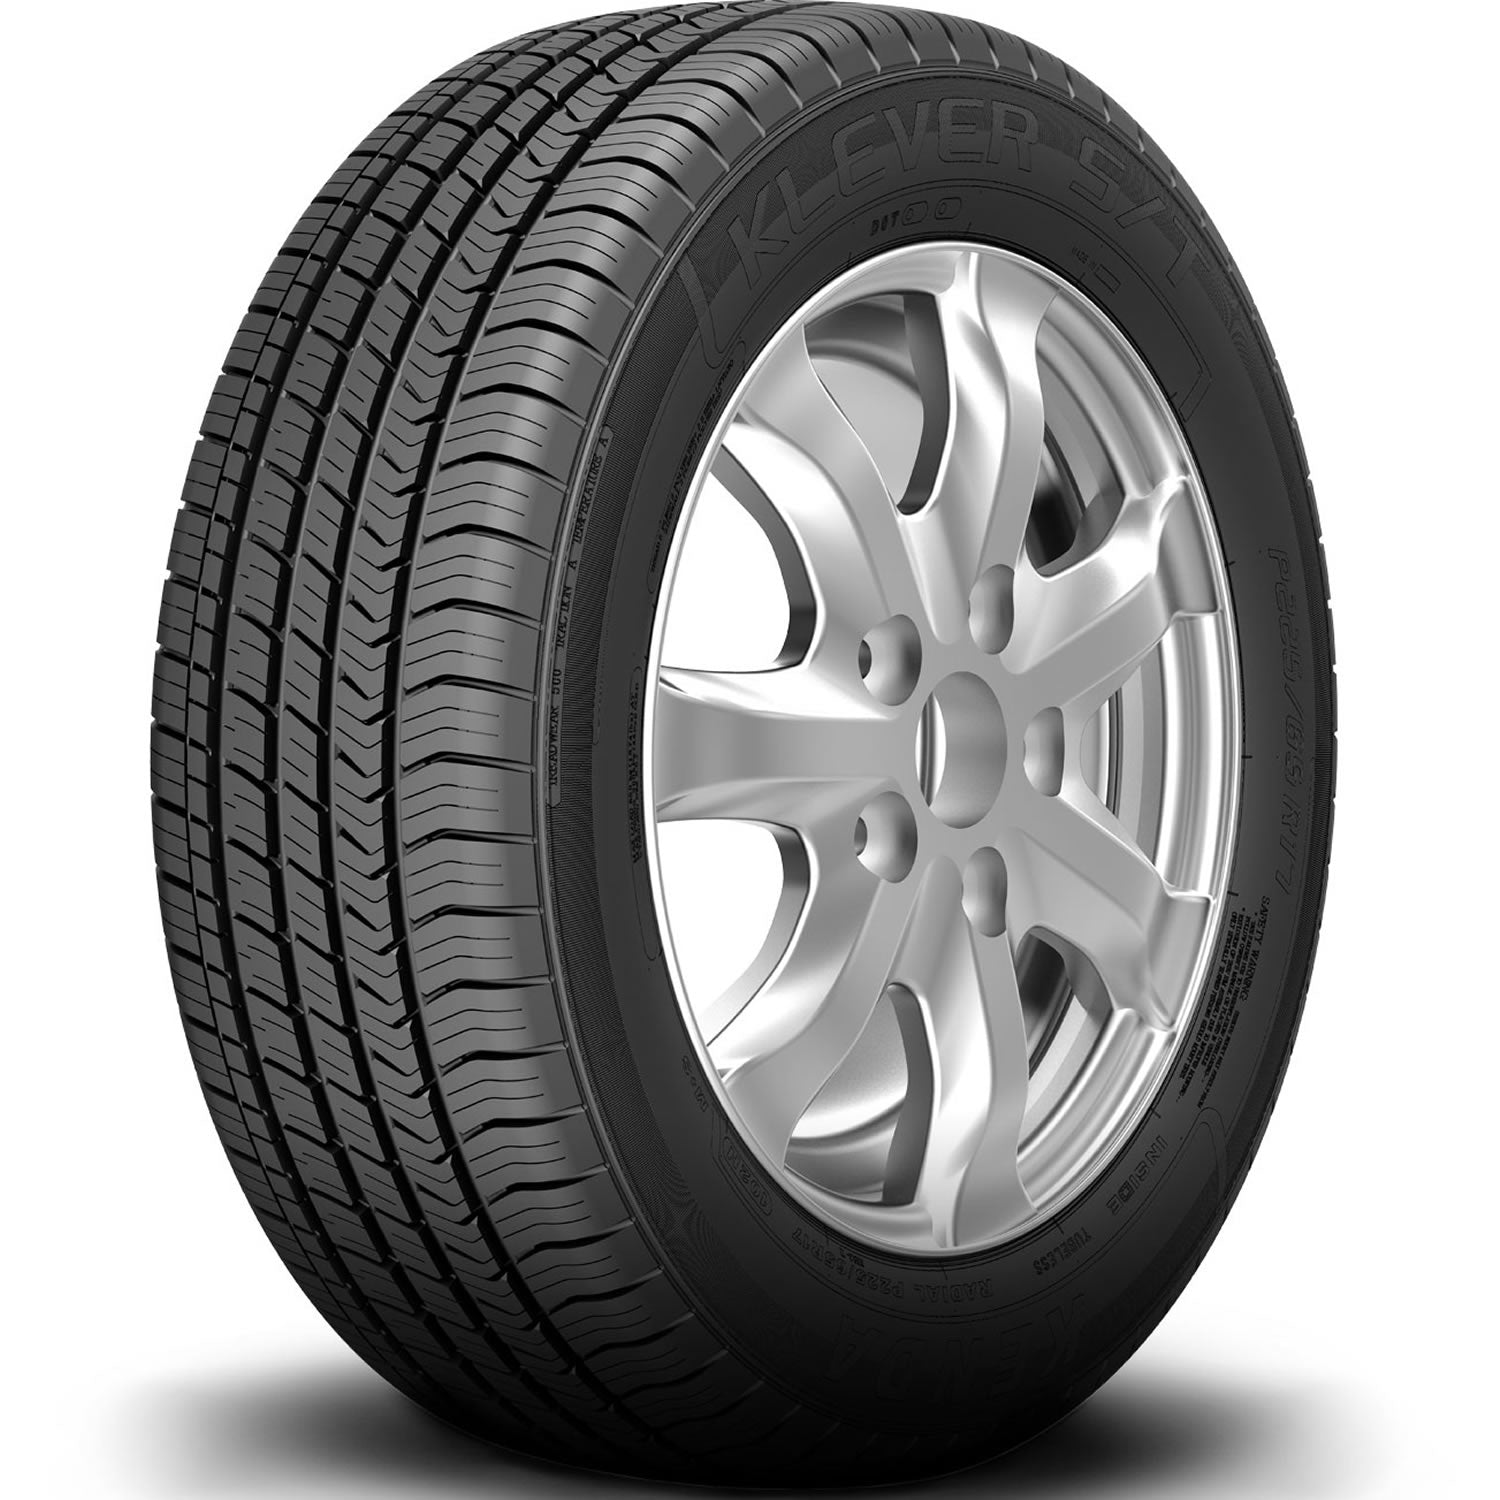 KENDA KLEVER ST 245/65R17 (29.5X9.8R 17) Tires